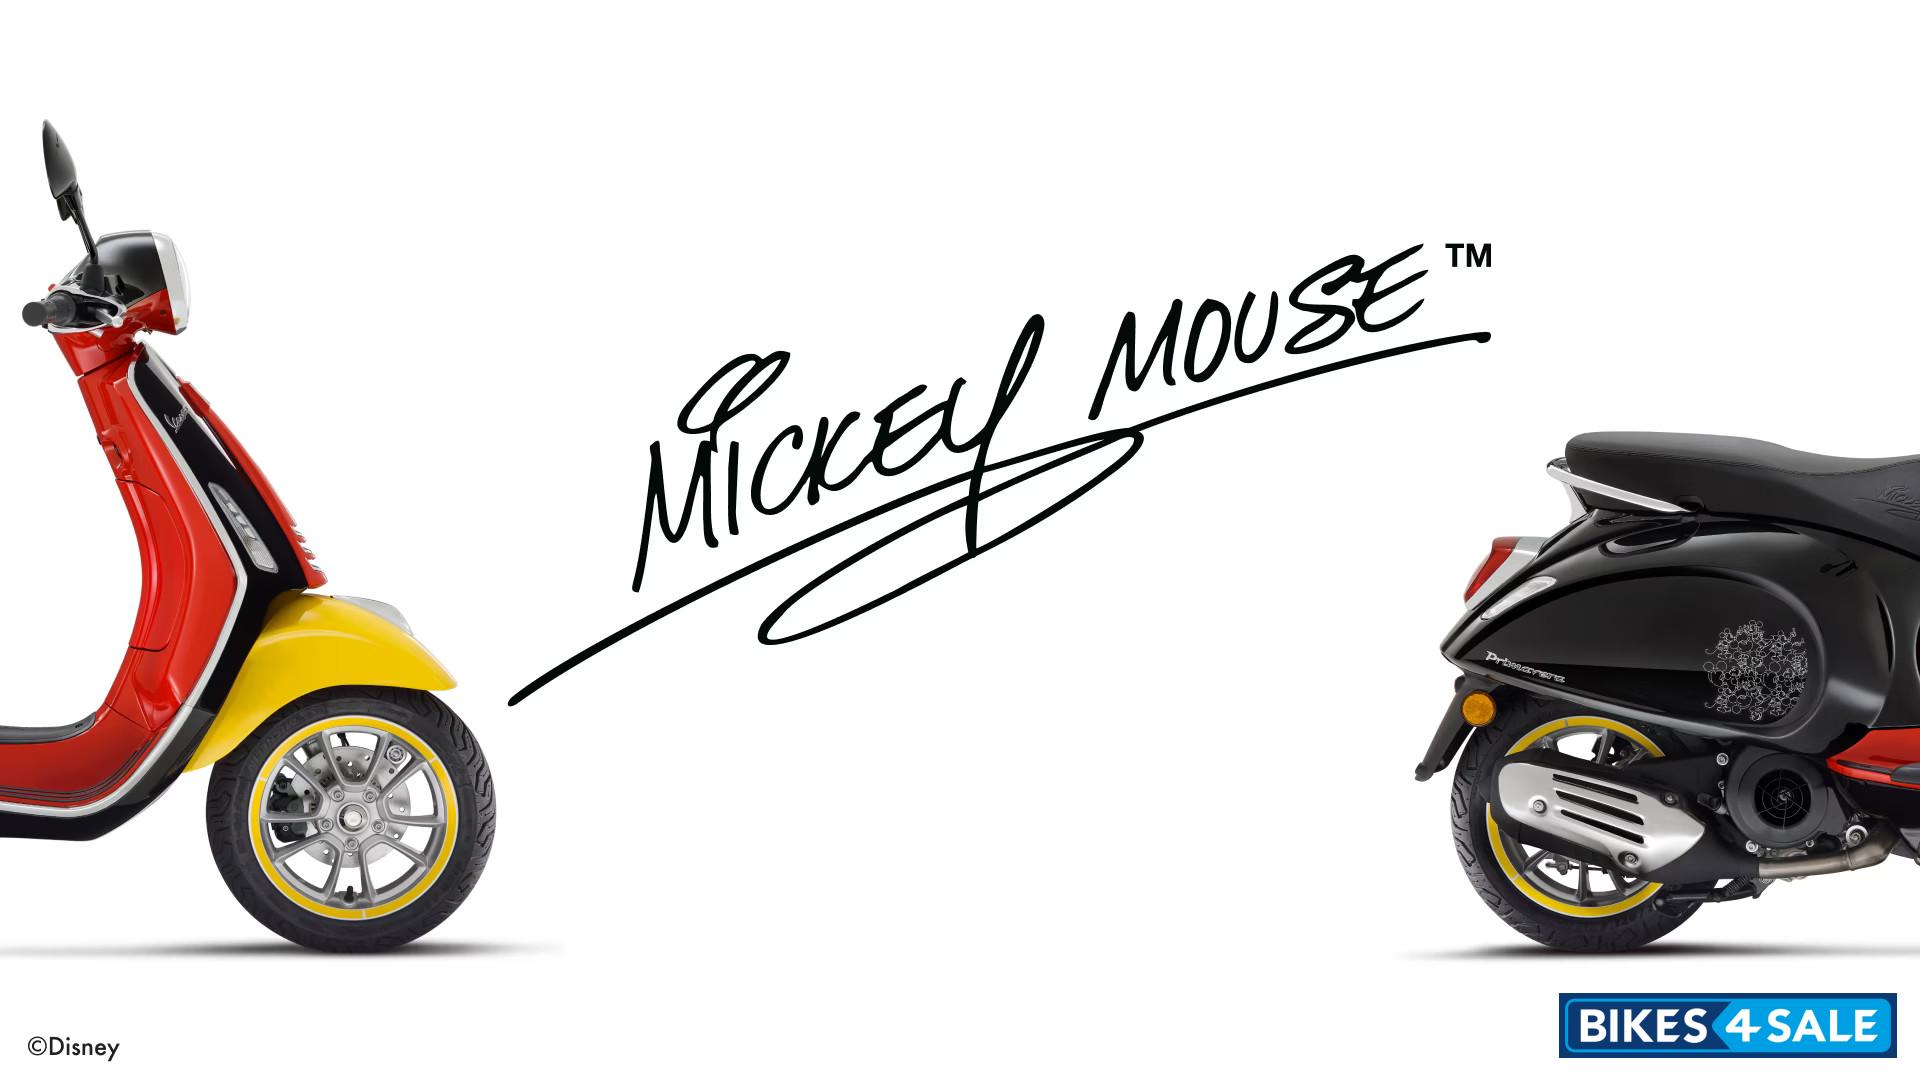 Vespa 125cc Mickey Mouse Edition